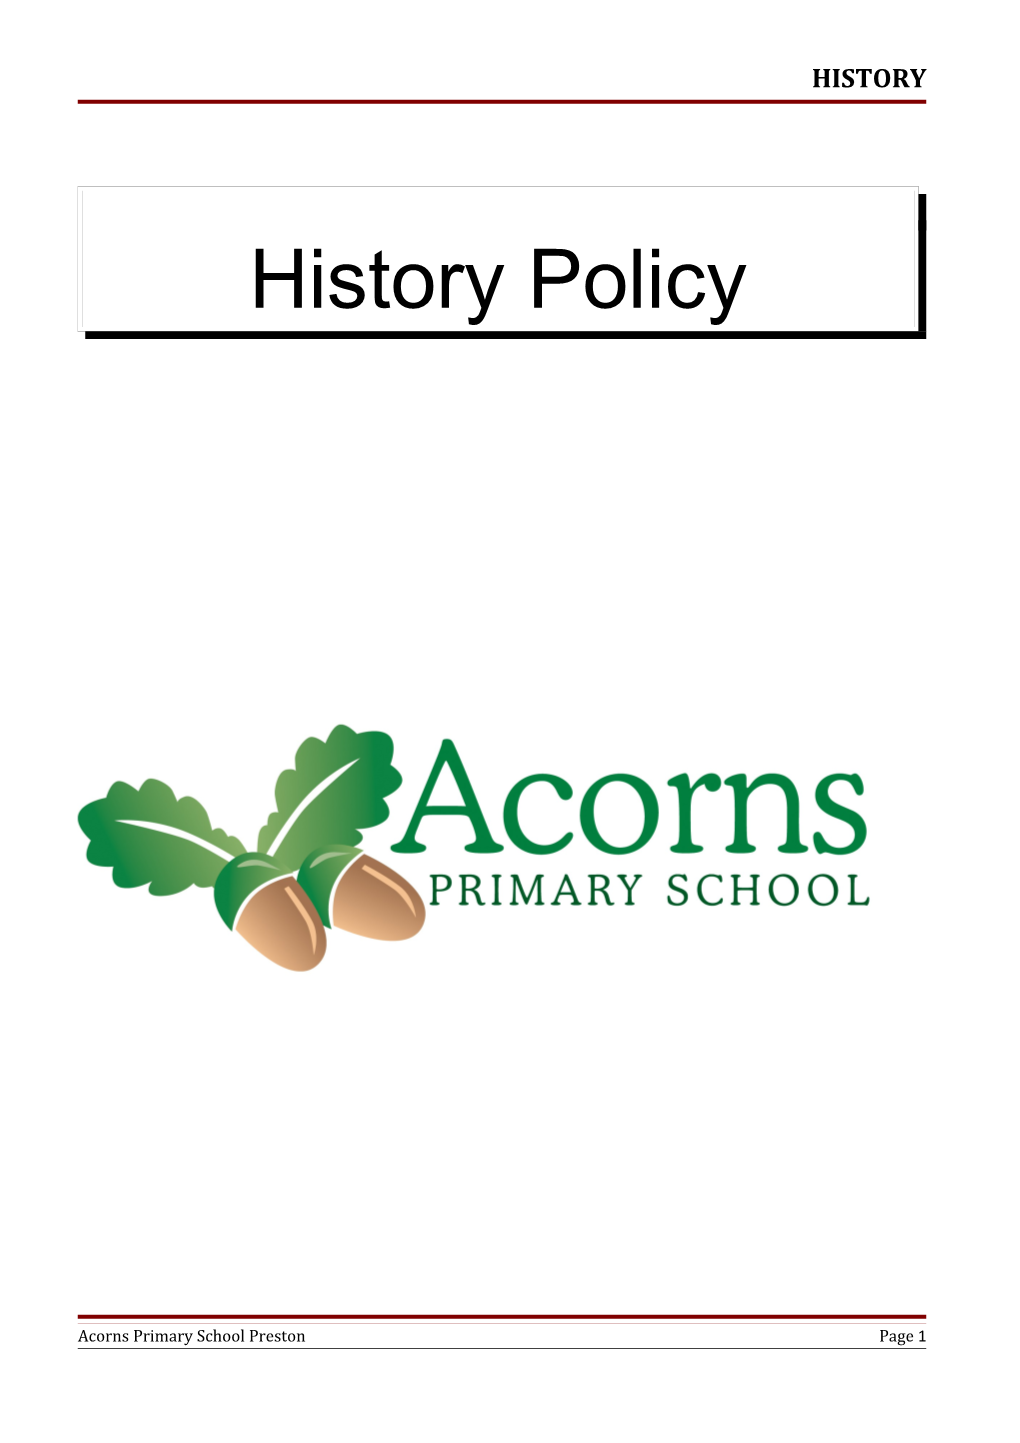 ACORNS PRIMARY SCHOOL History Policy